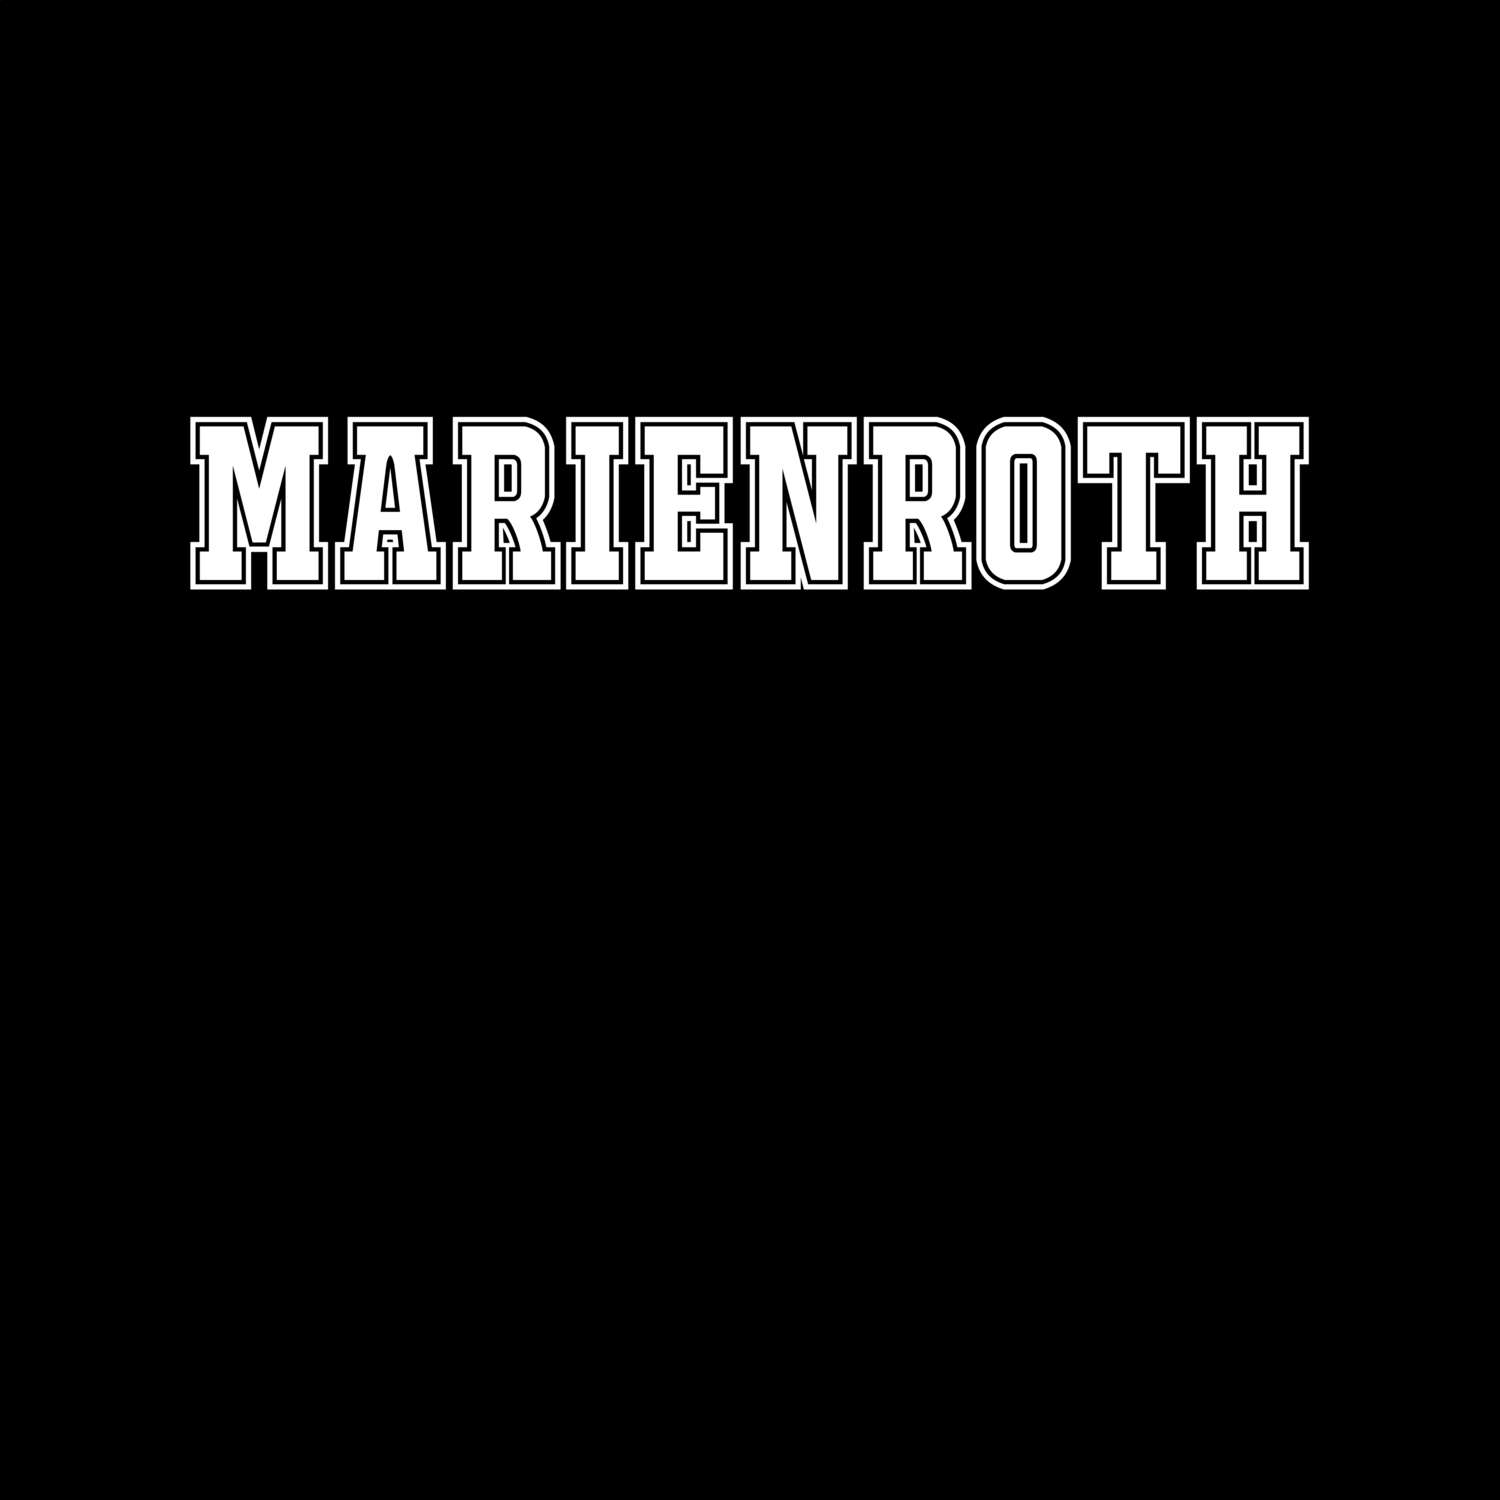 Marienroth T-Shirt »Classic«